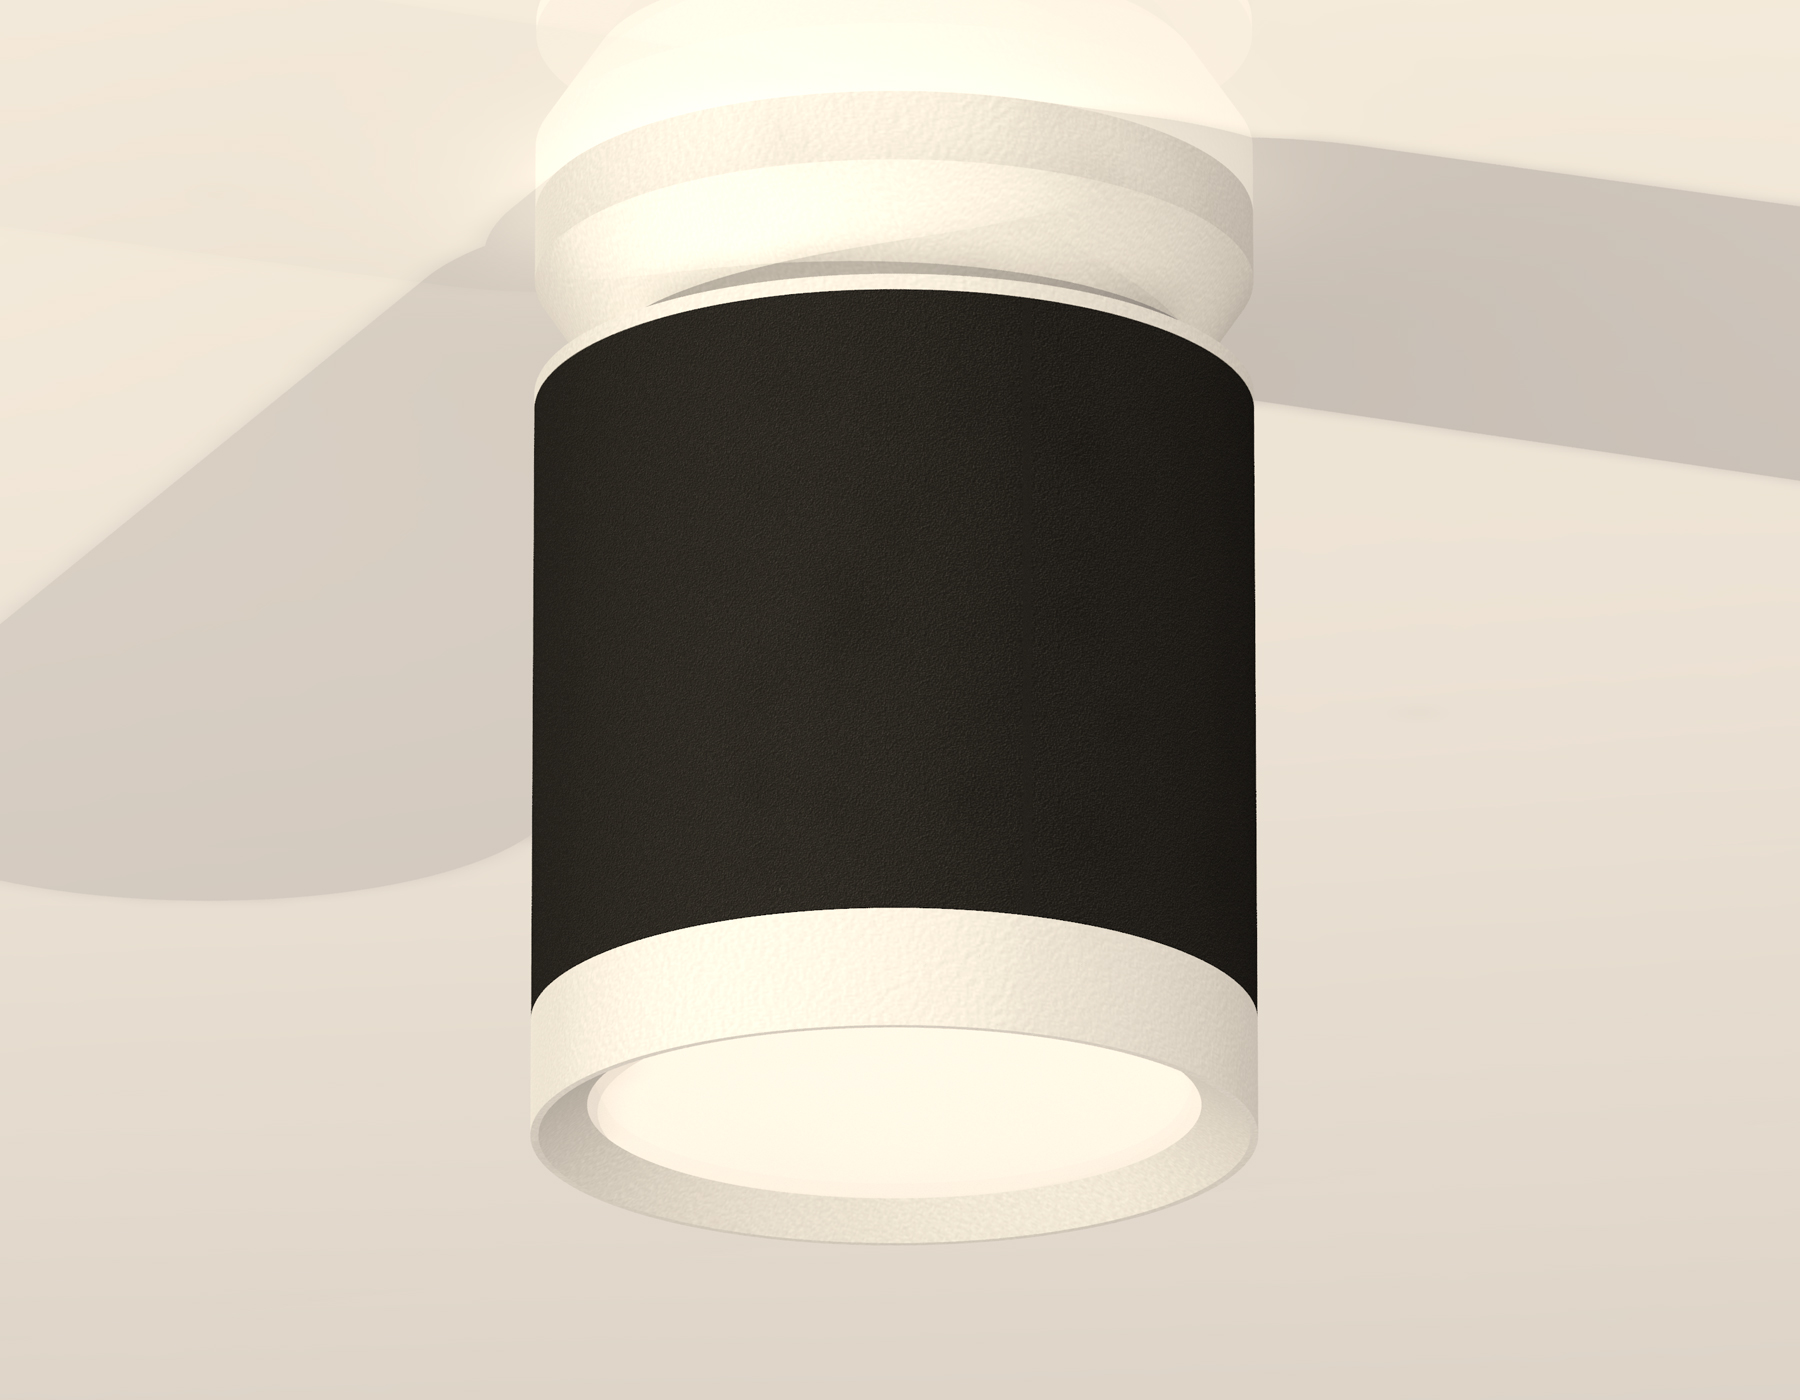 Потолочный светильник Ambrella Light Techno Spot XS8142015 (N8901, C8142, N8112)